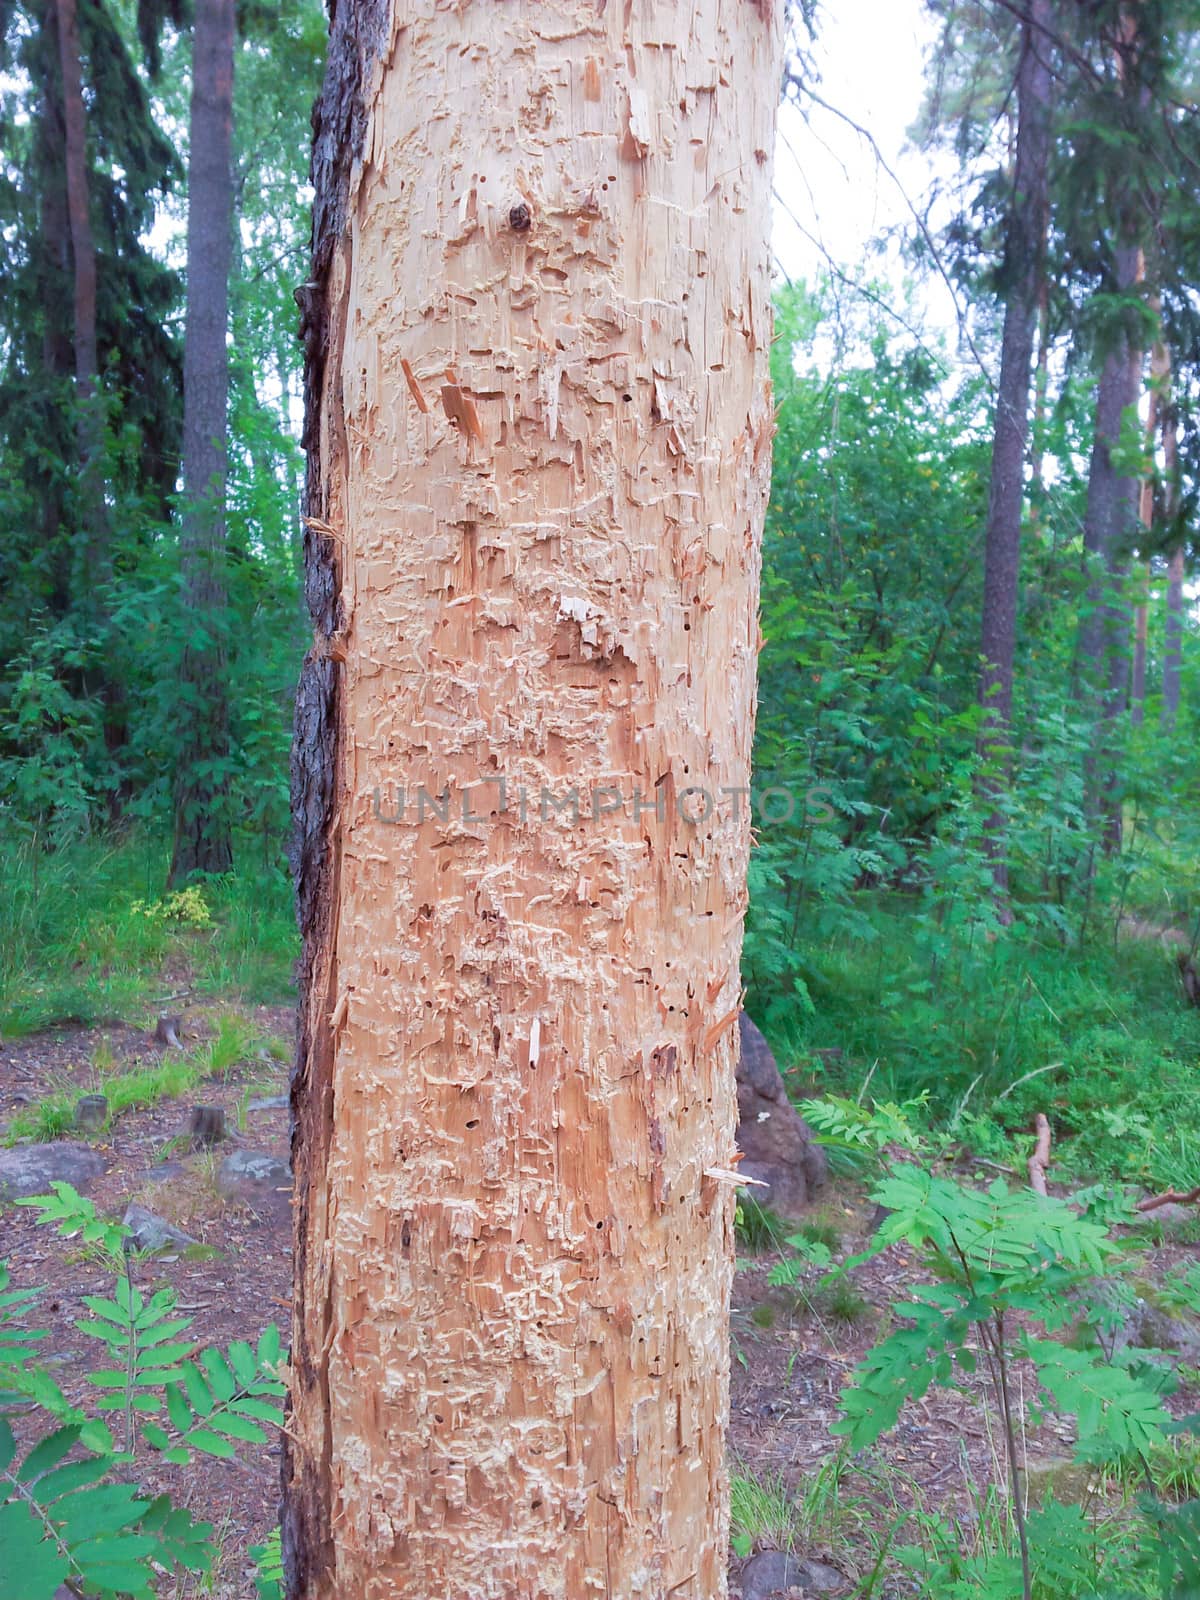 Tree eaten by termites by Arvebettum